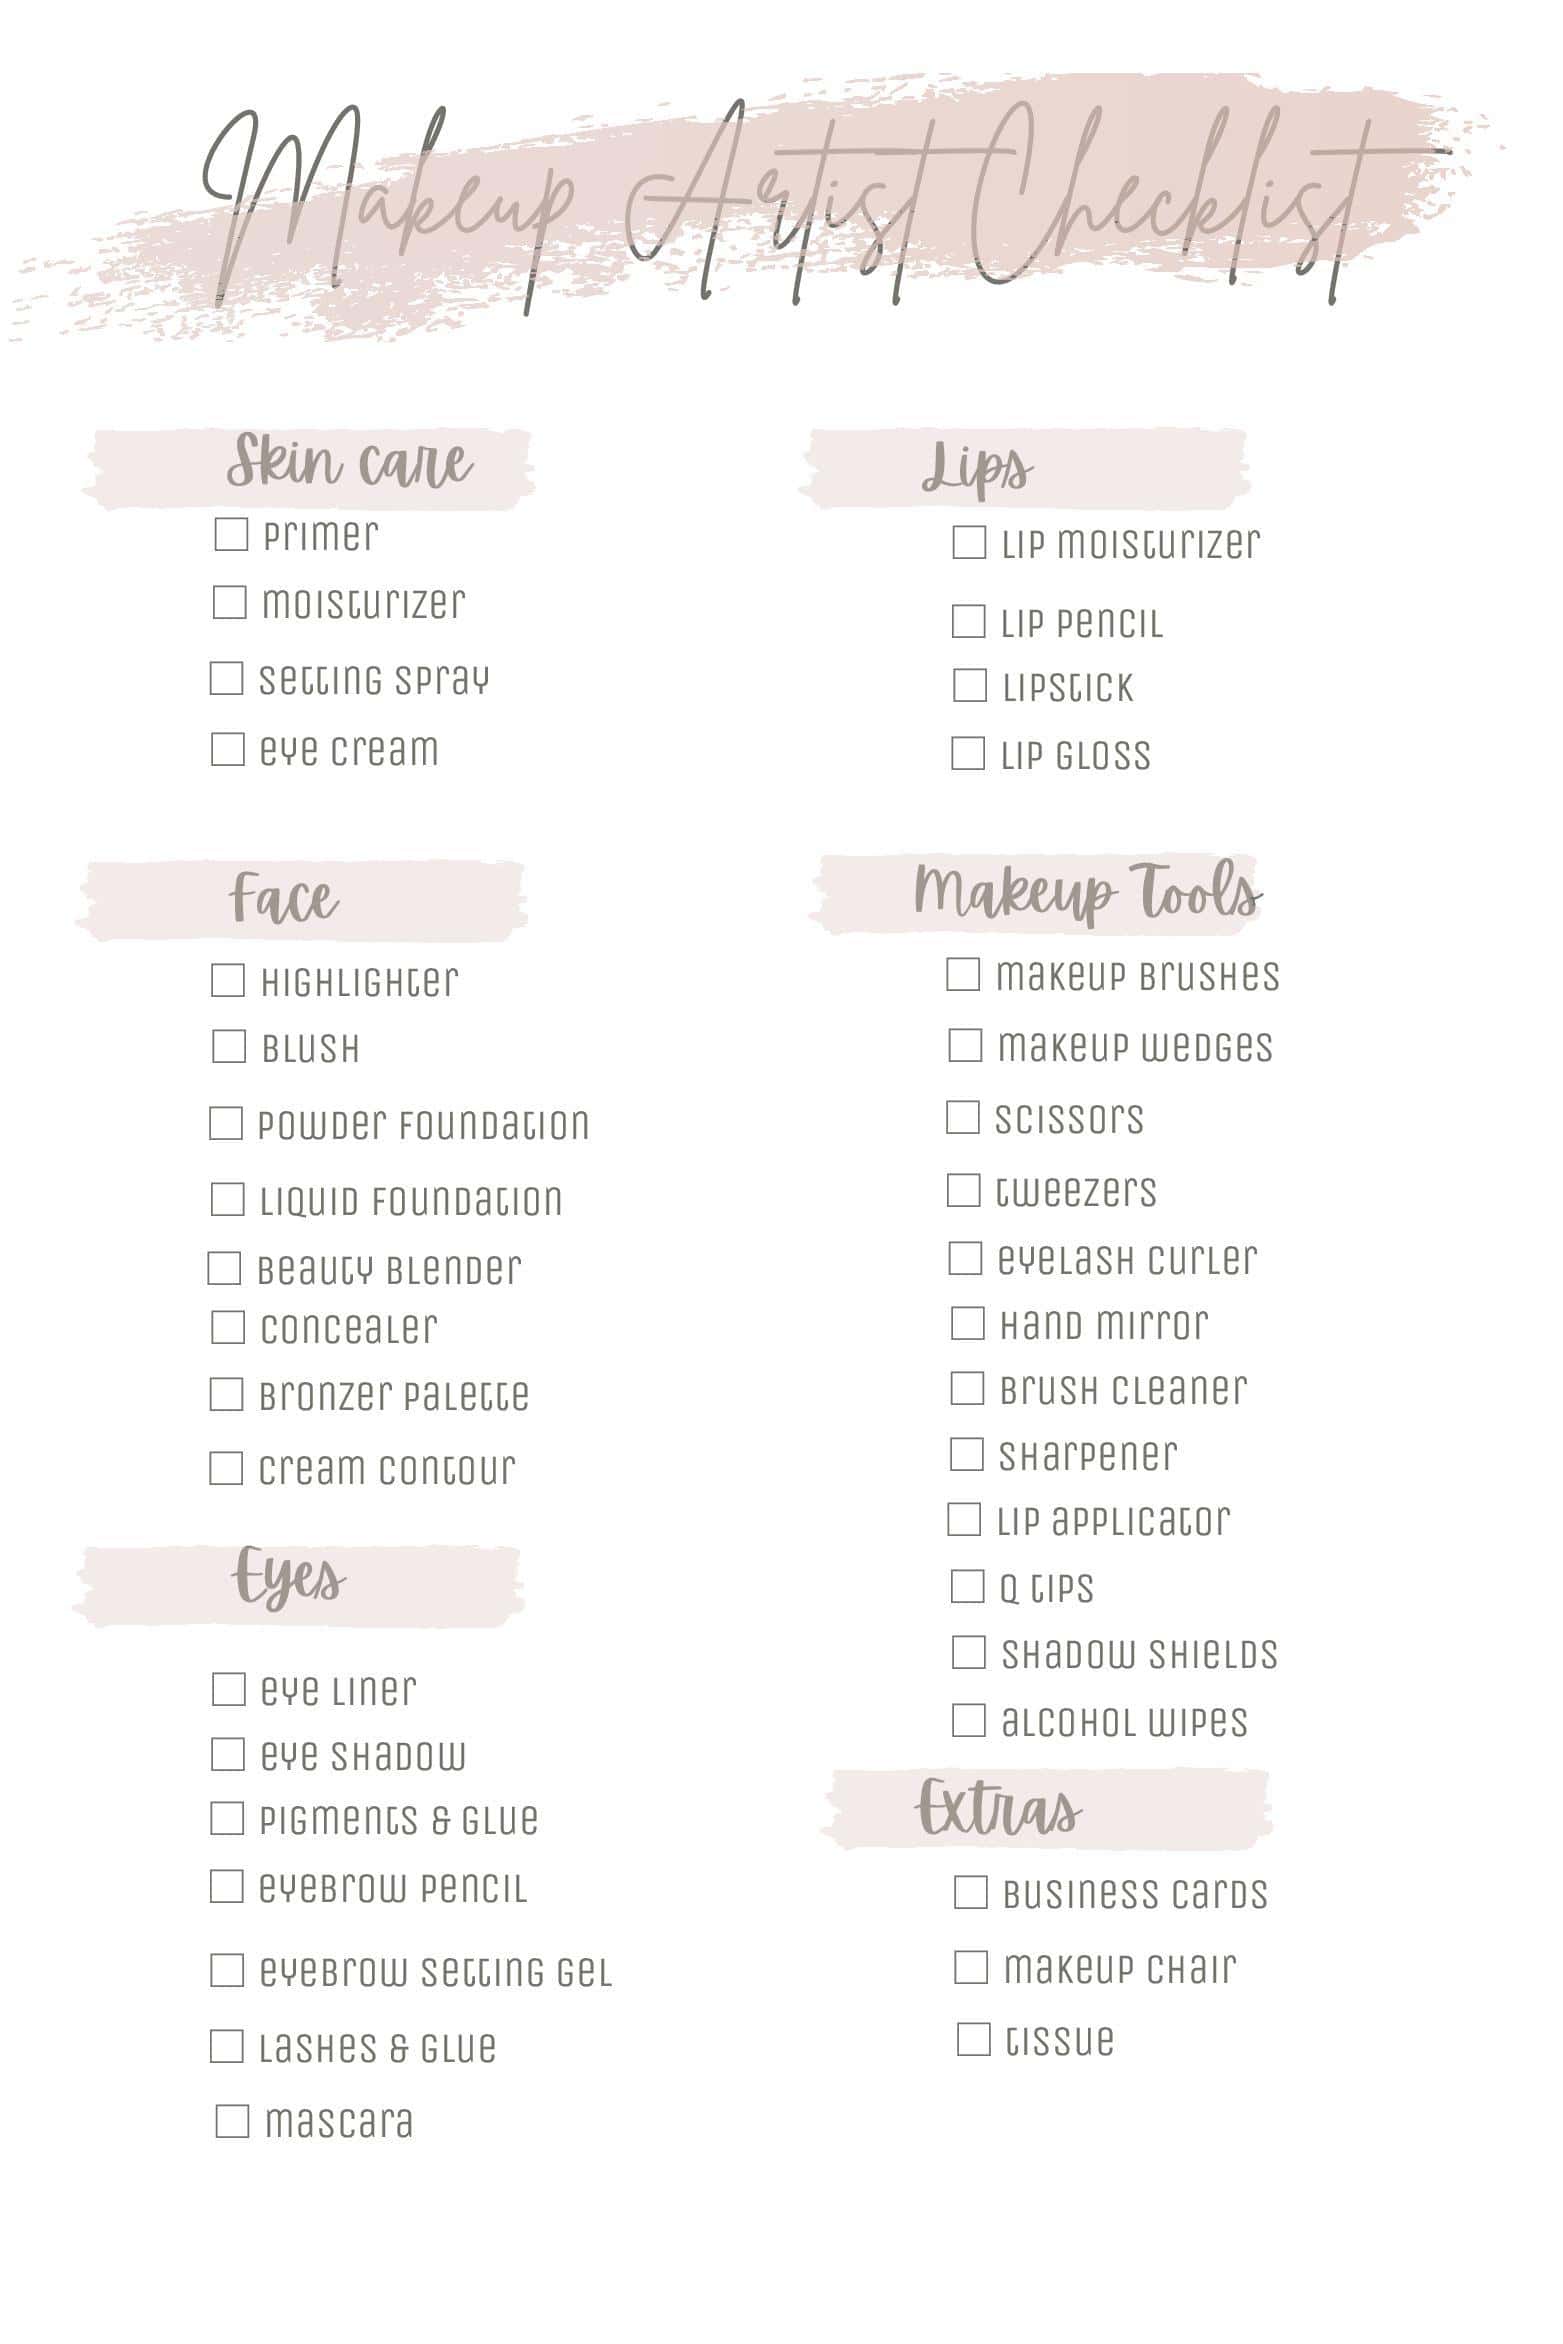 Makeup Artist Checklist